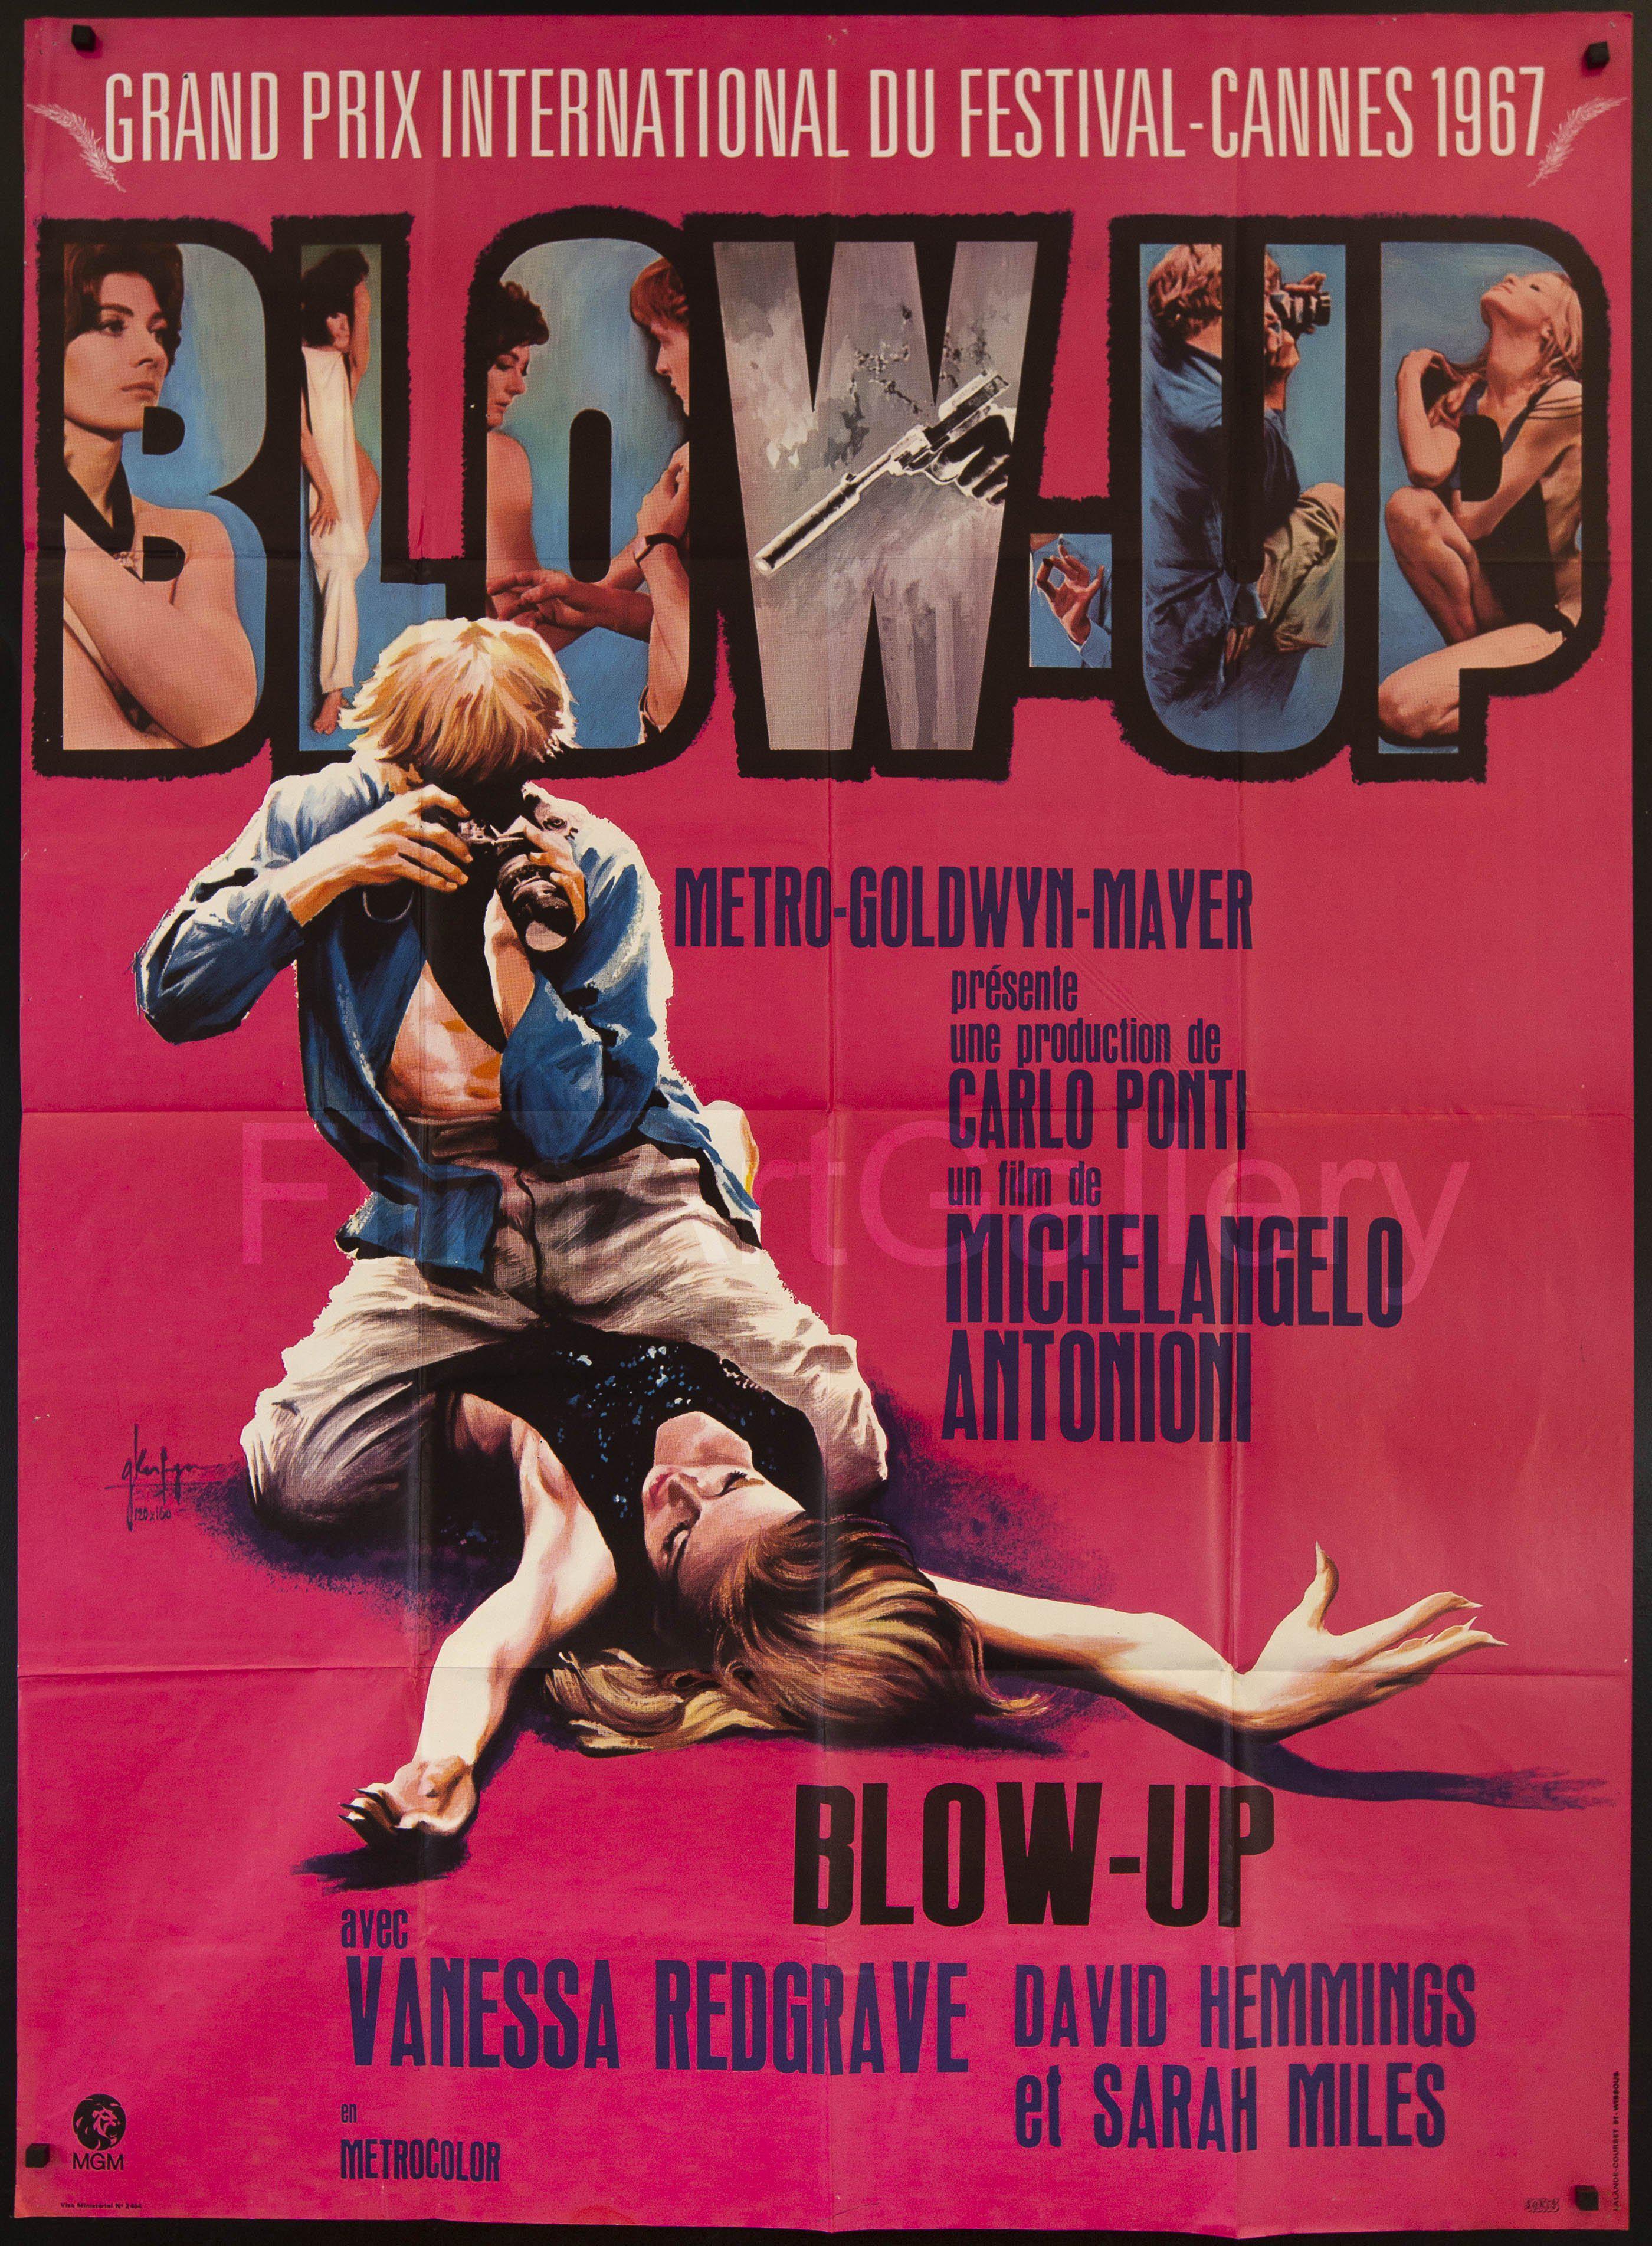 Blow up movie. Фотоувеличение / blowup (1966). Фотоувеличение", Антониони (1966). Микеланджело Антониони Фотоувеличение.